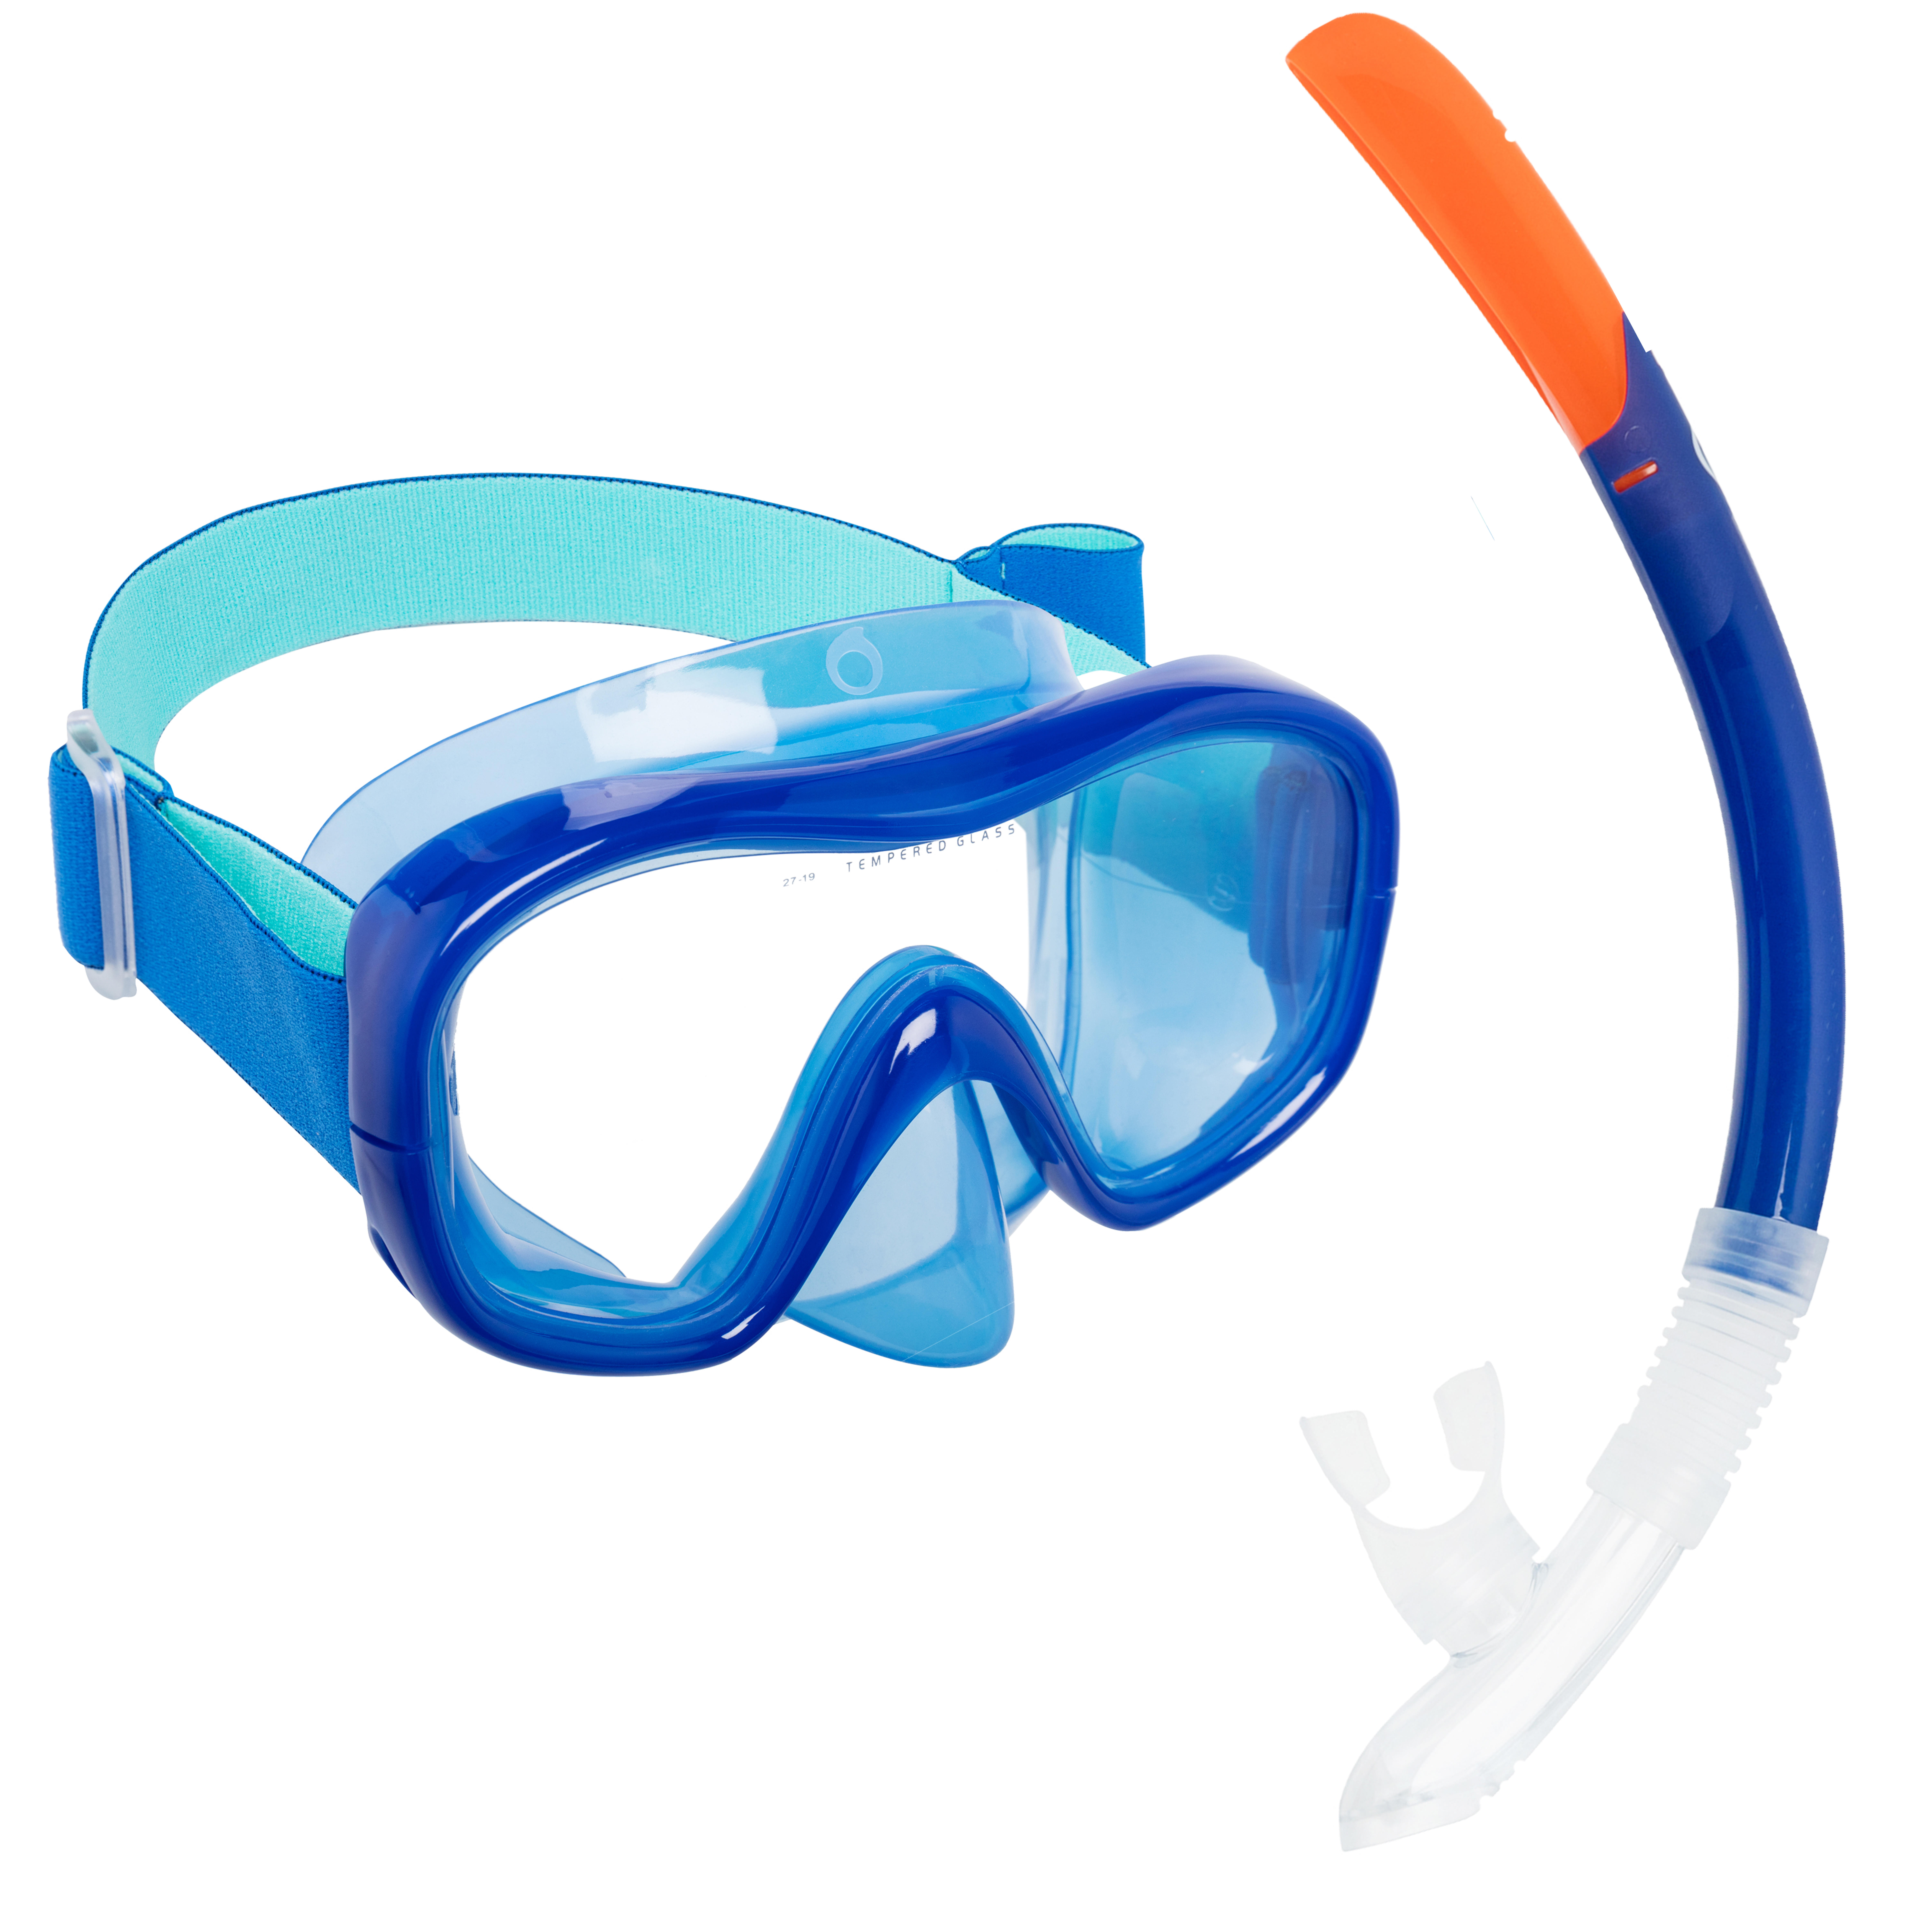 Kit Snorkeling Mască și Tub SNK 100 Albastru Adulți La Oferta Online decathlon imagine La Oferta Online